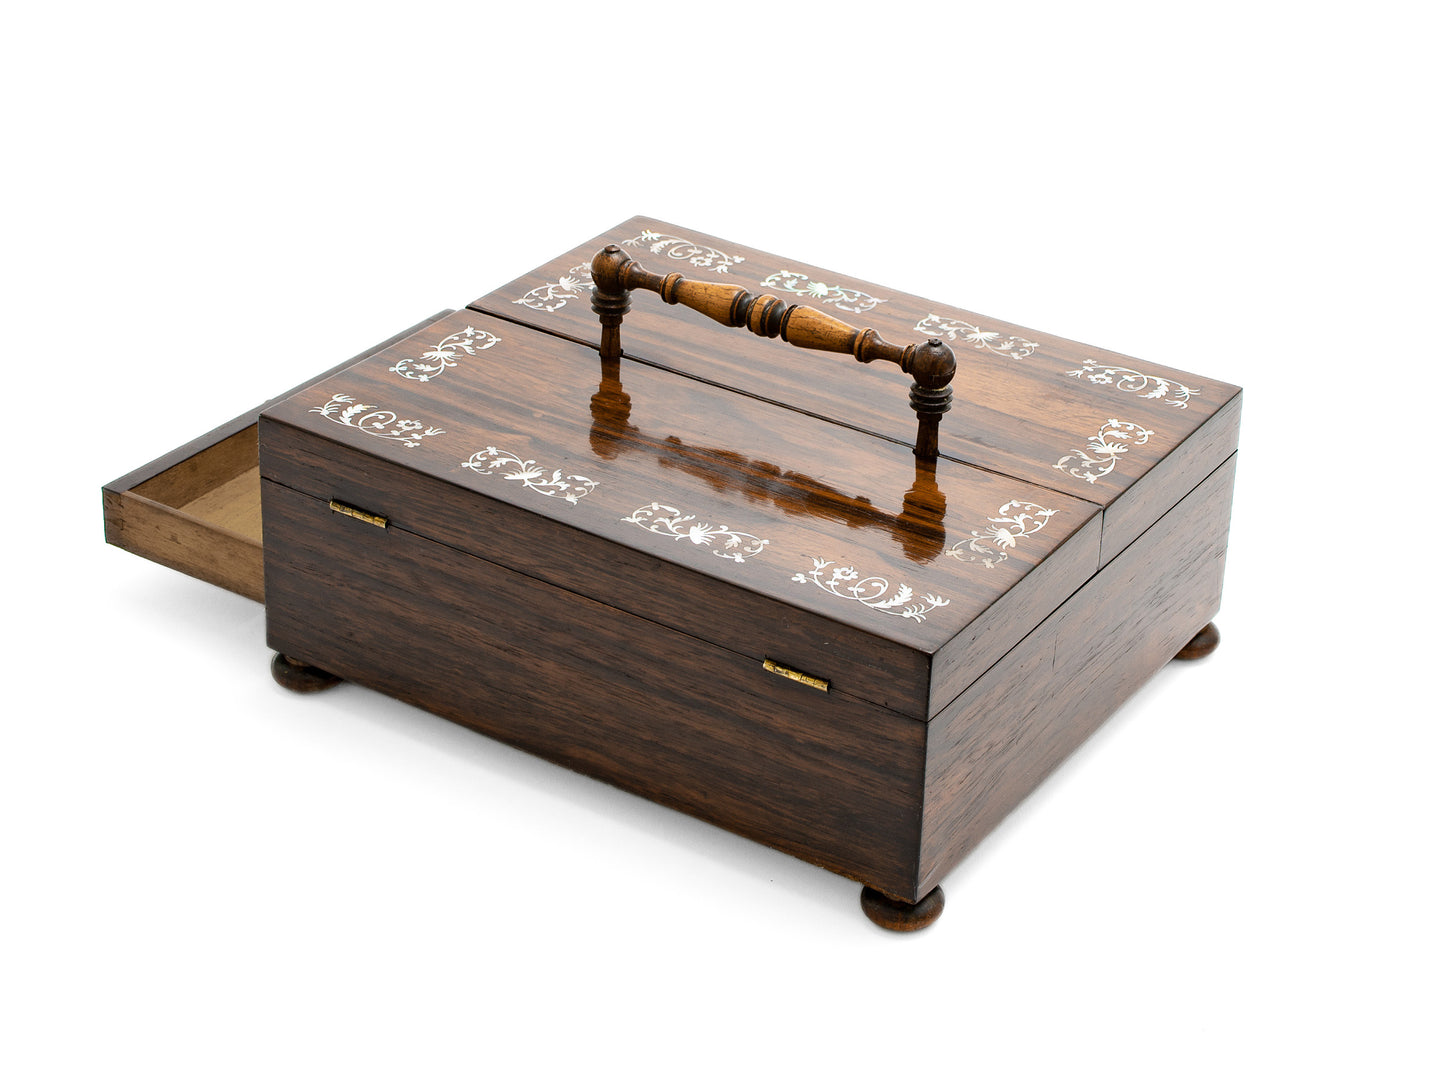 Antique Georgian Regency / William IV Rosewood Portable Writing Box / Inkstand (Code 2150)